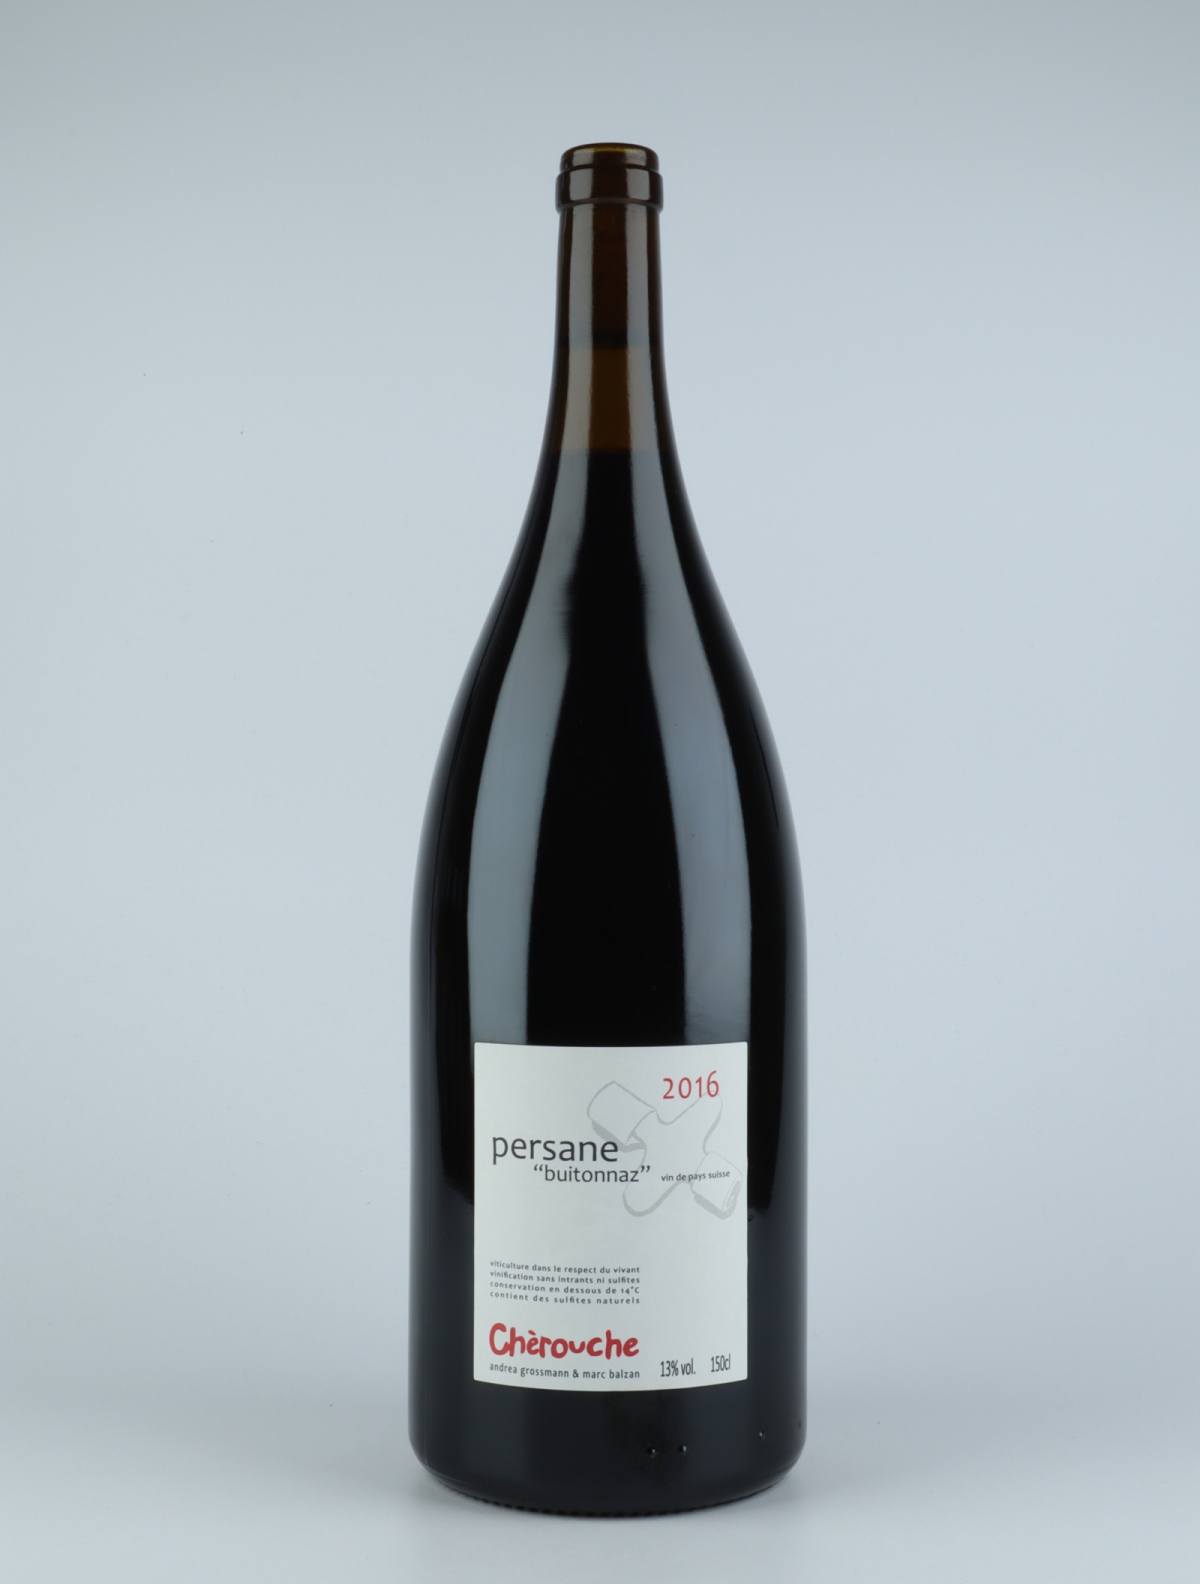 A bottle 2016 Persane Syrah - Magnum Red wine from Chèrouche, Valais in Switzerland